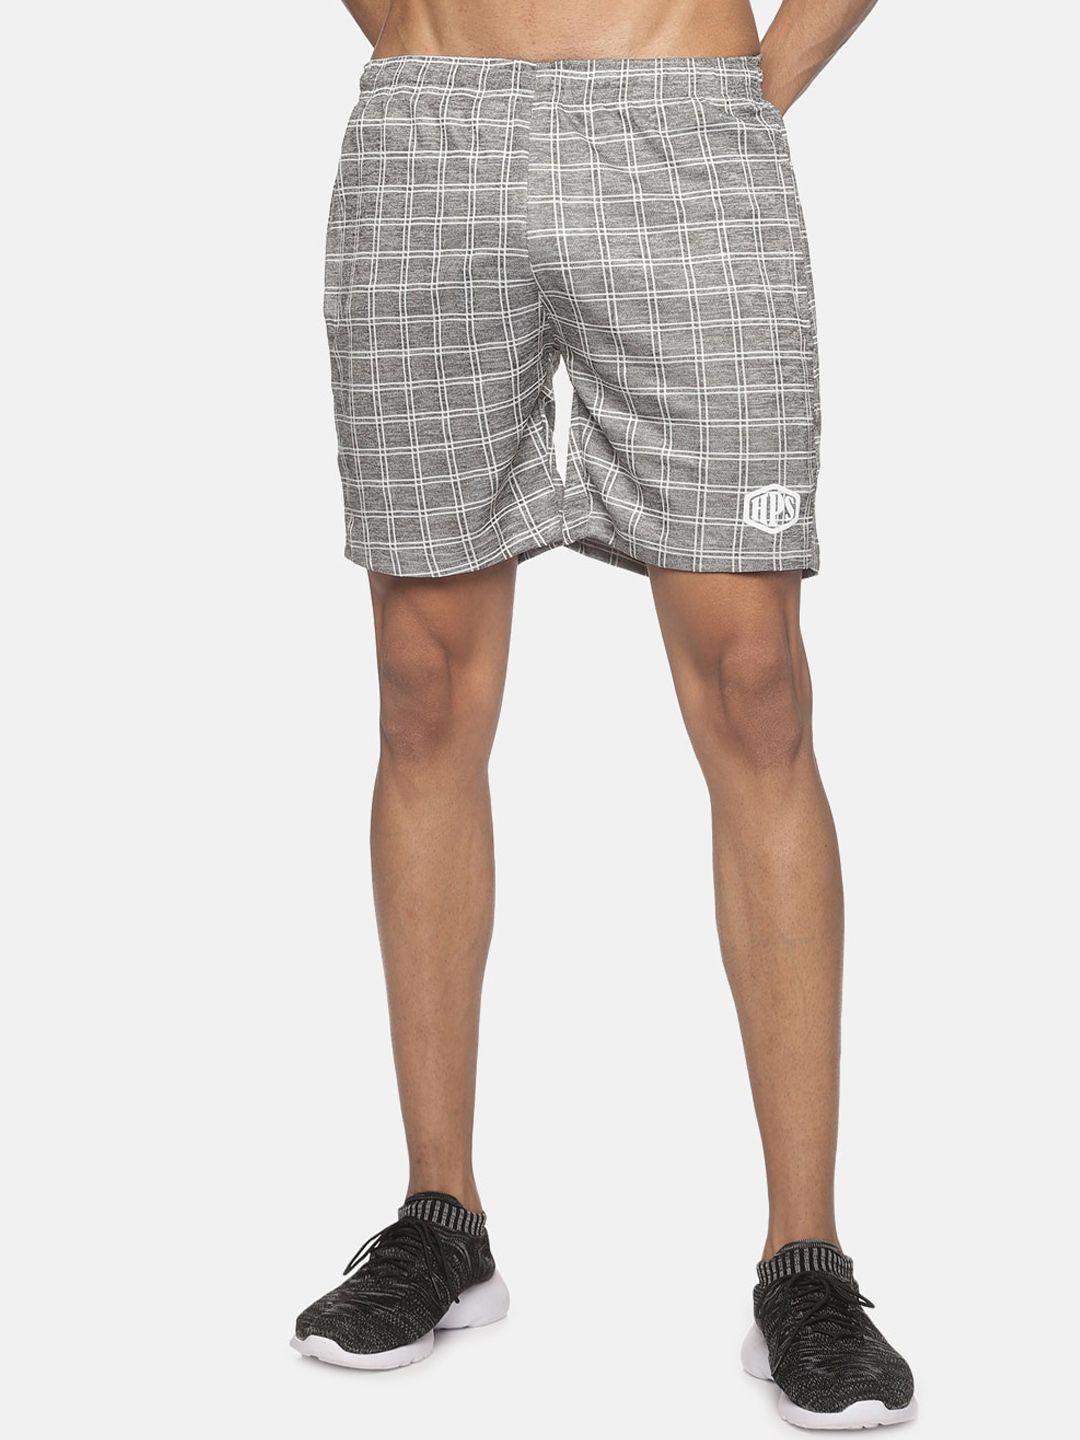 hps-sports-men-grey-checked-slim-fit-running-sports-shorts